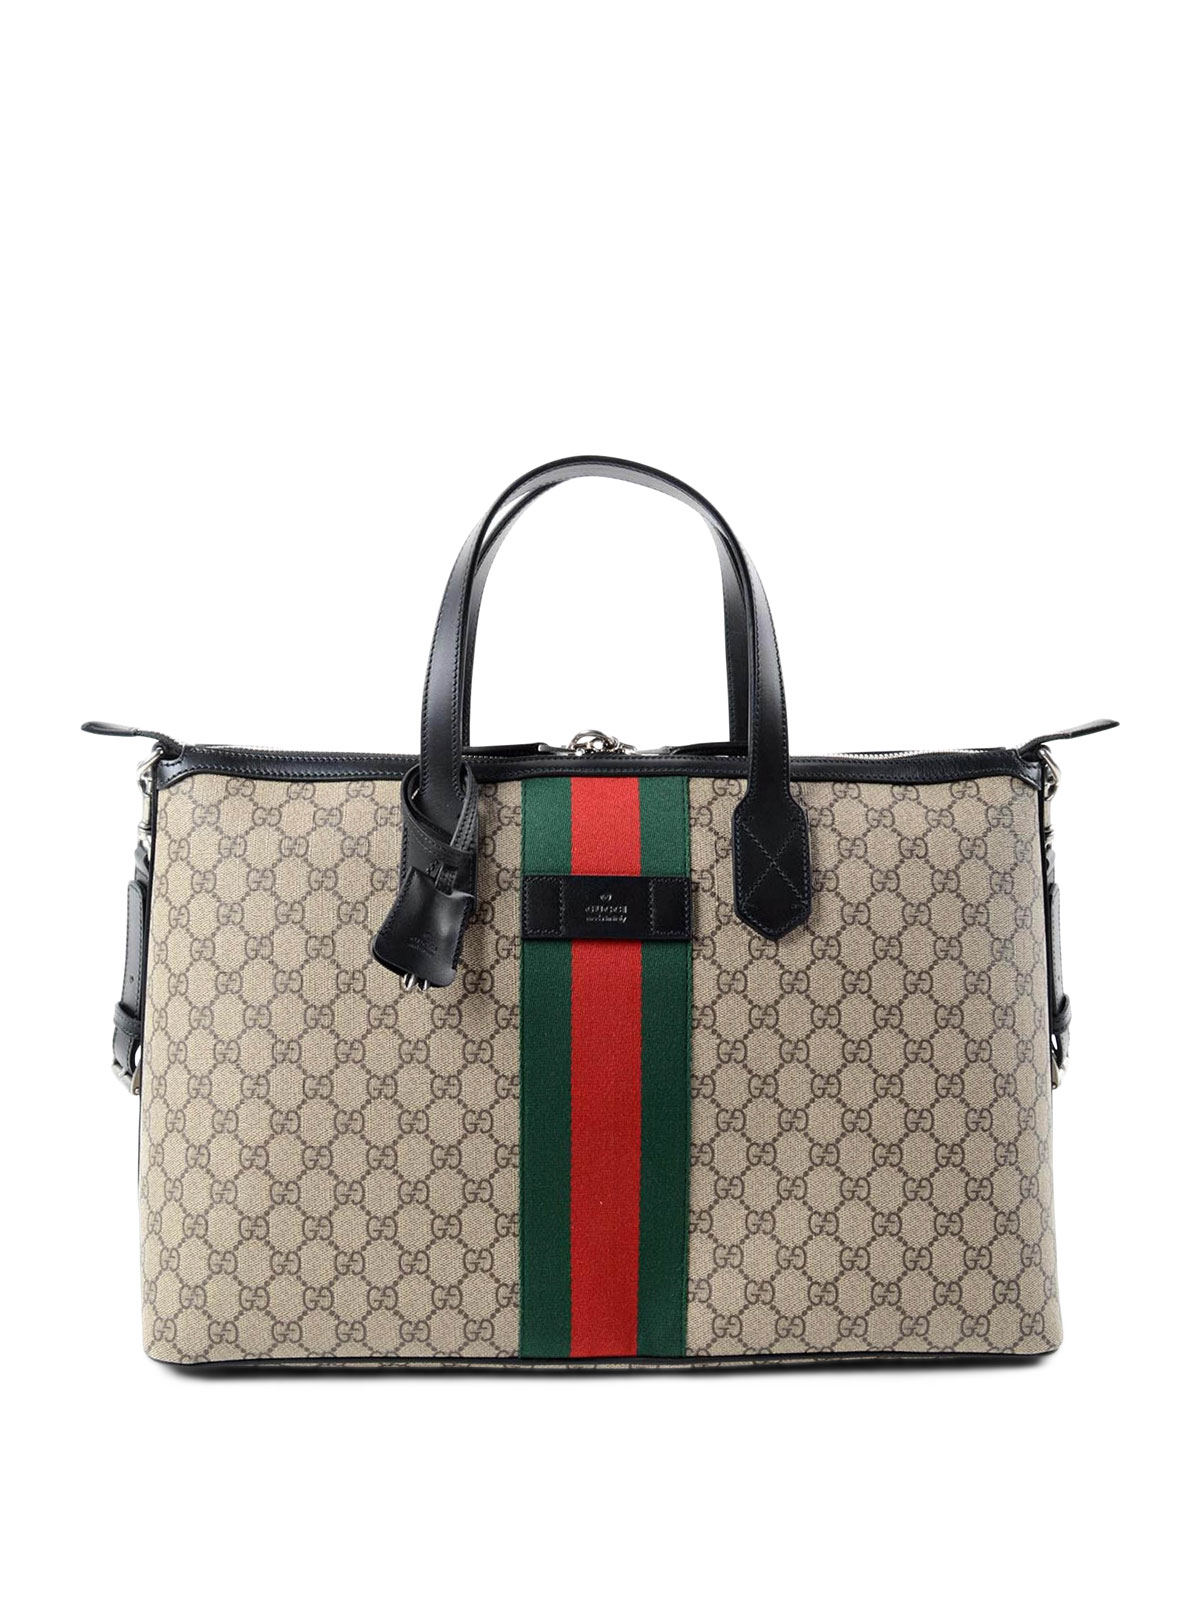 Gucci - GG Supreme canvas duffle bag - Luggage & Travel bags ...